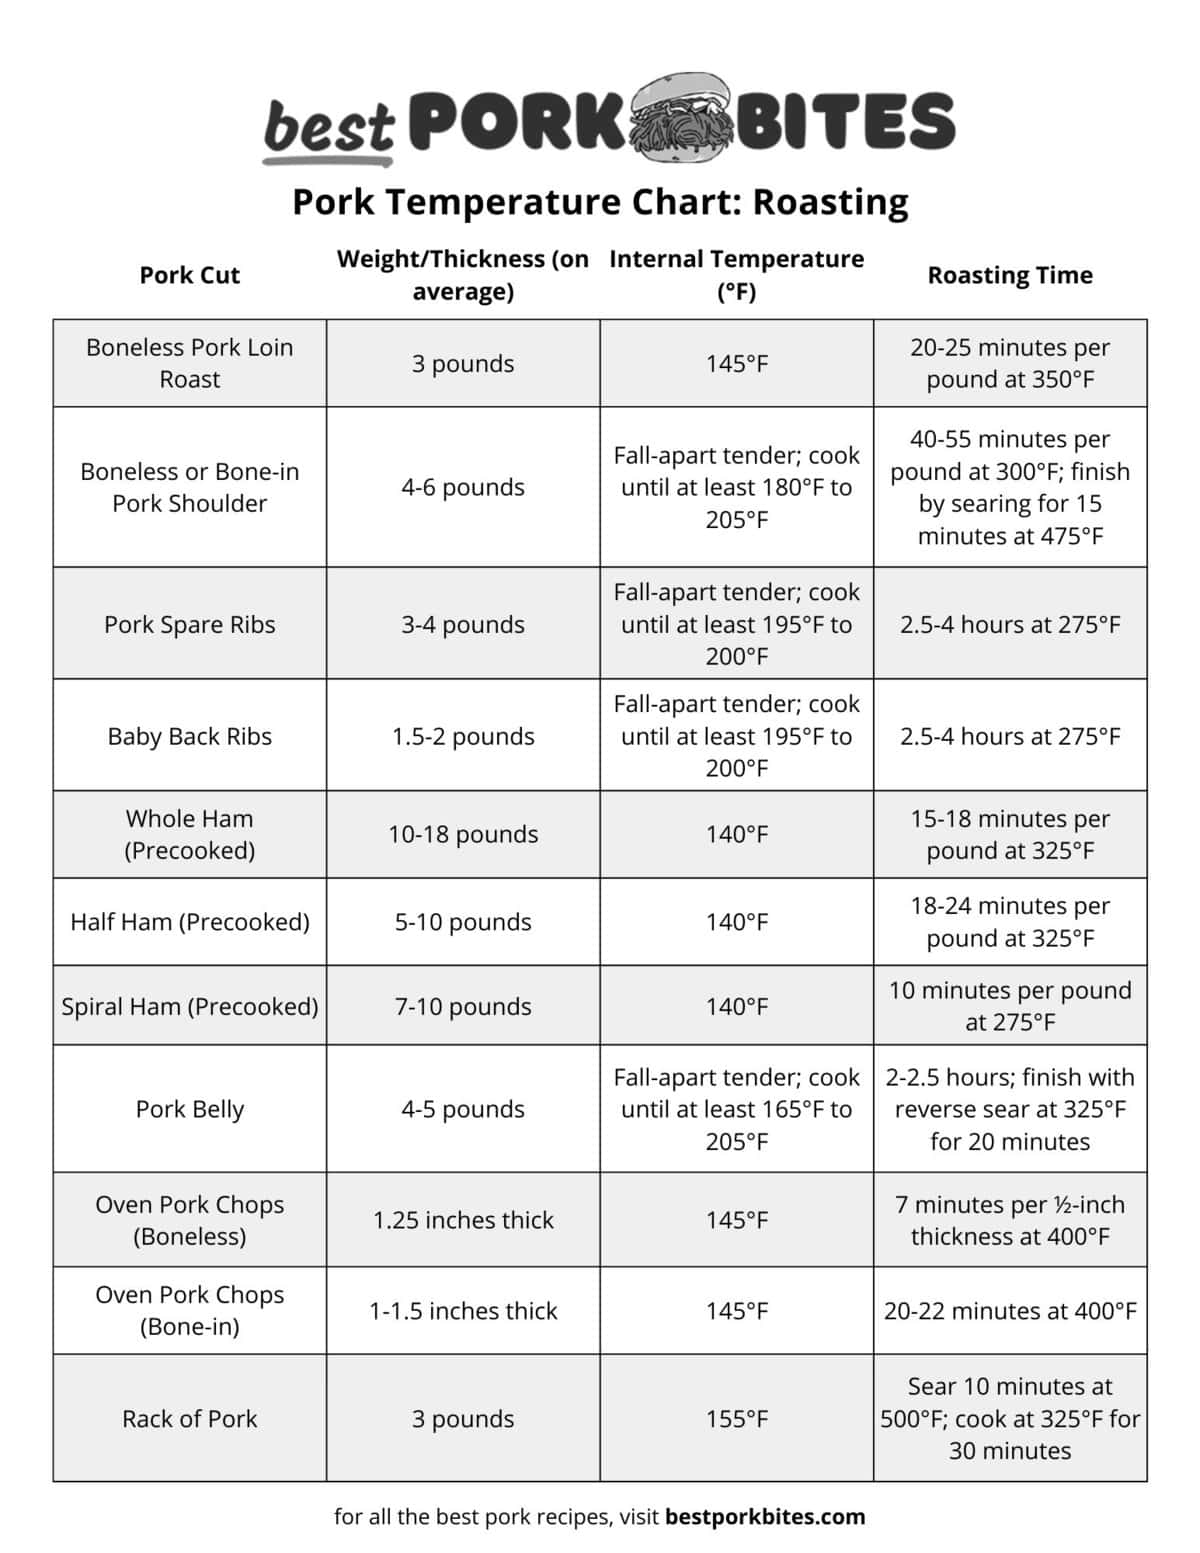 preview of printalbe pork temp chart showing pork roasting times